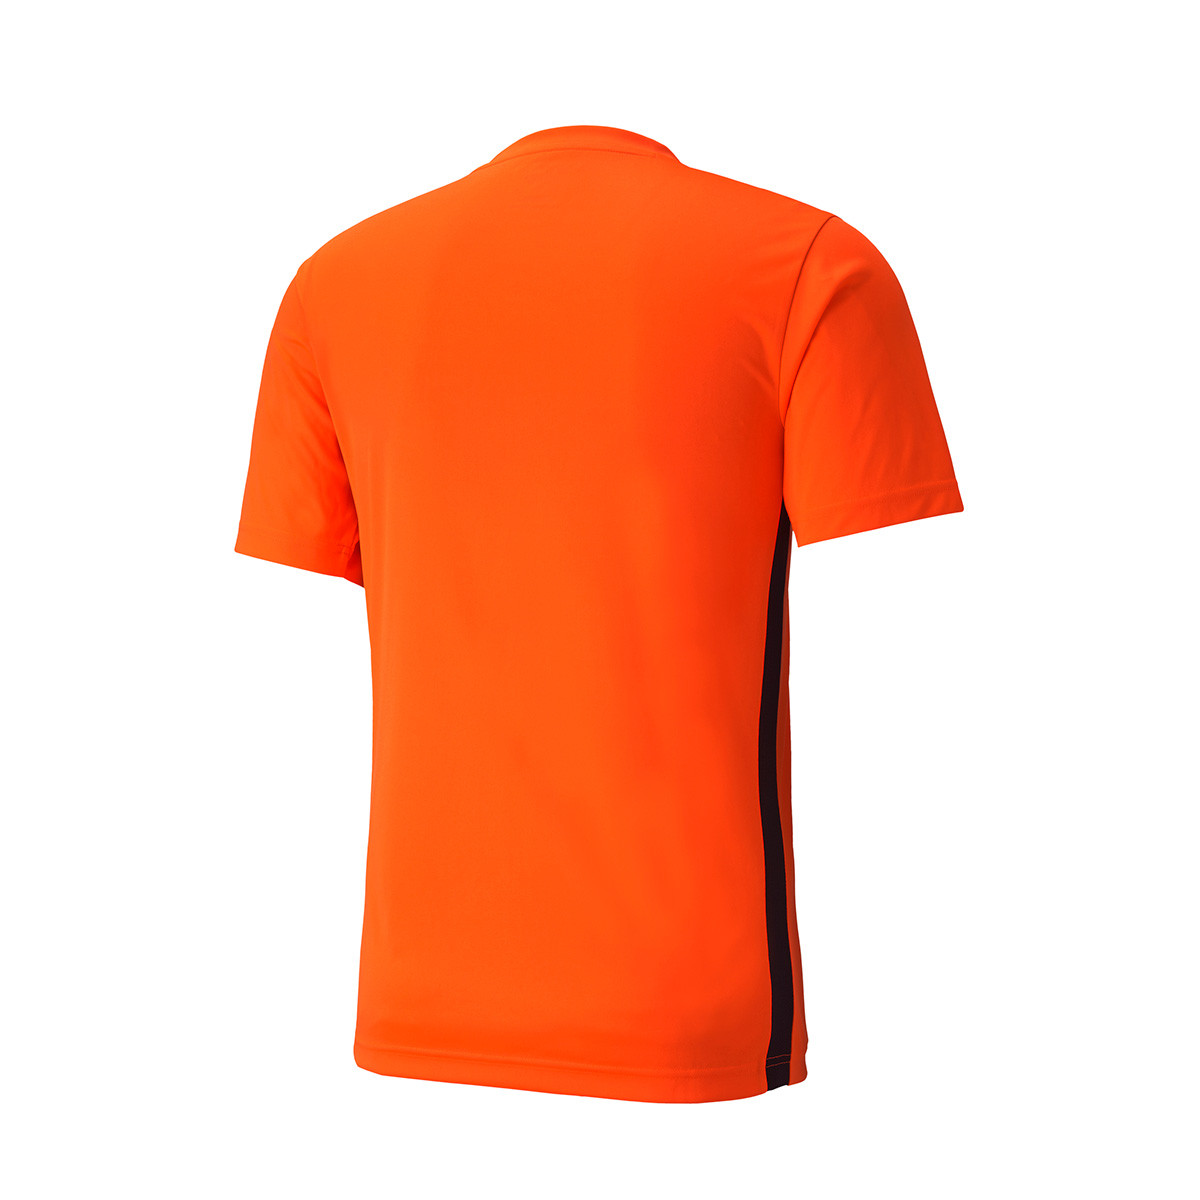 Camiseta Puma ftblPLAY Graphic Shocking orange-Puma black - Tienda de  fútbol Fútbol Emotion